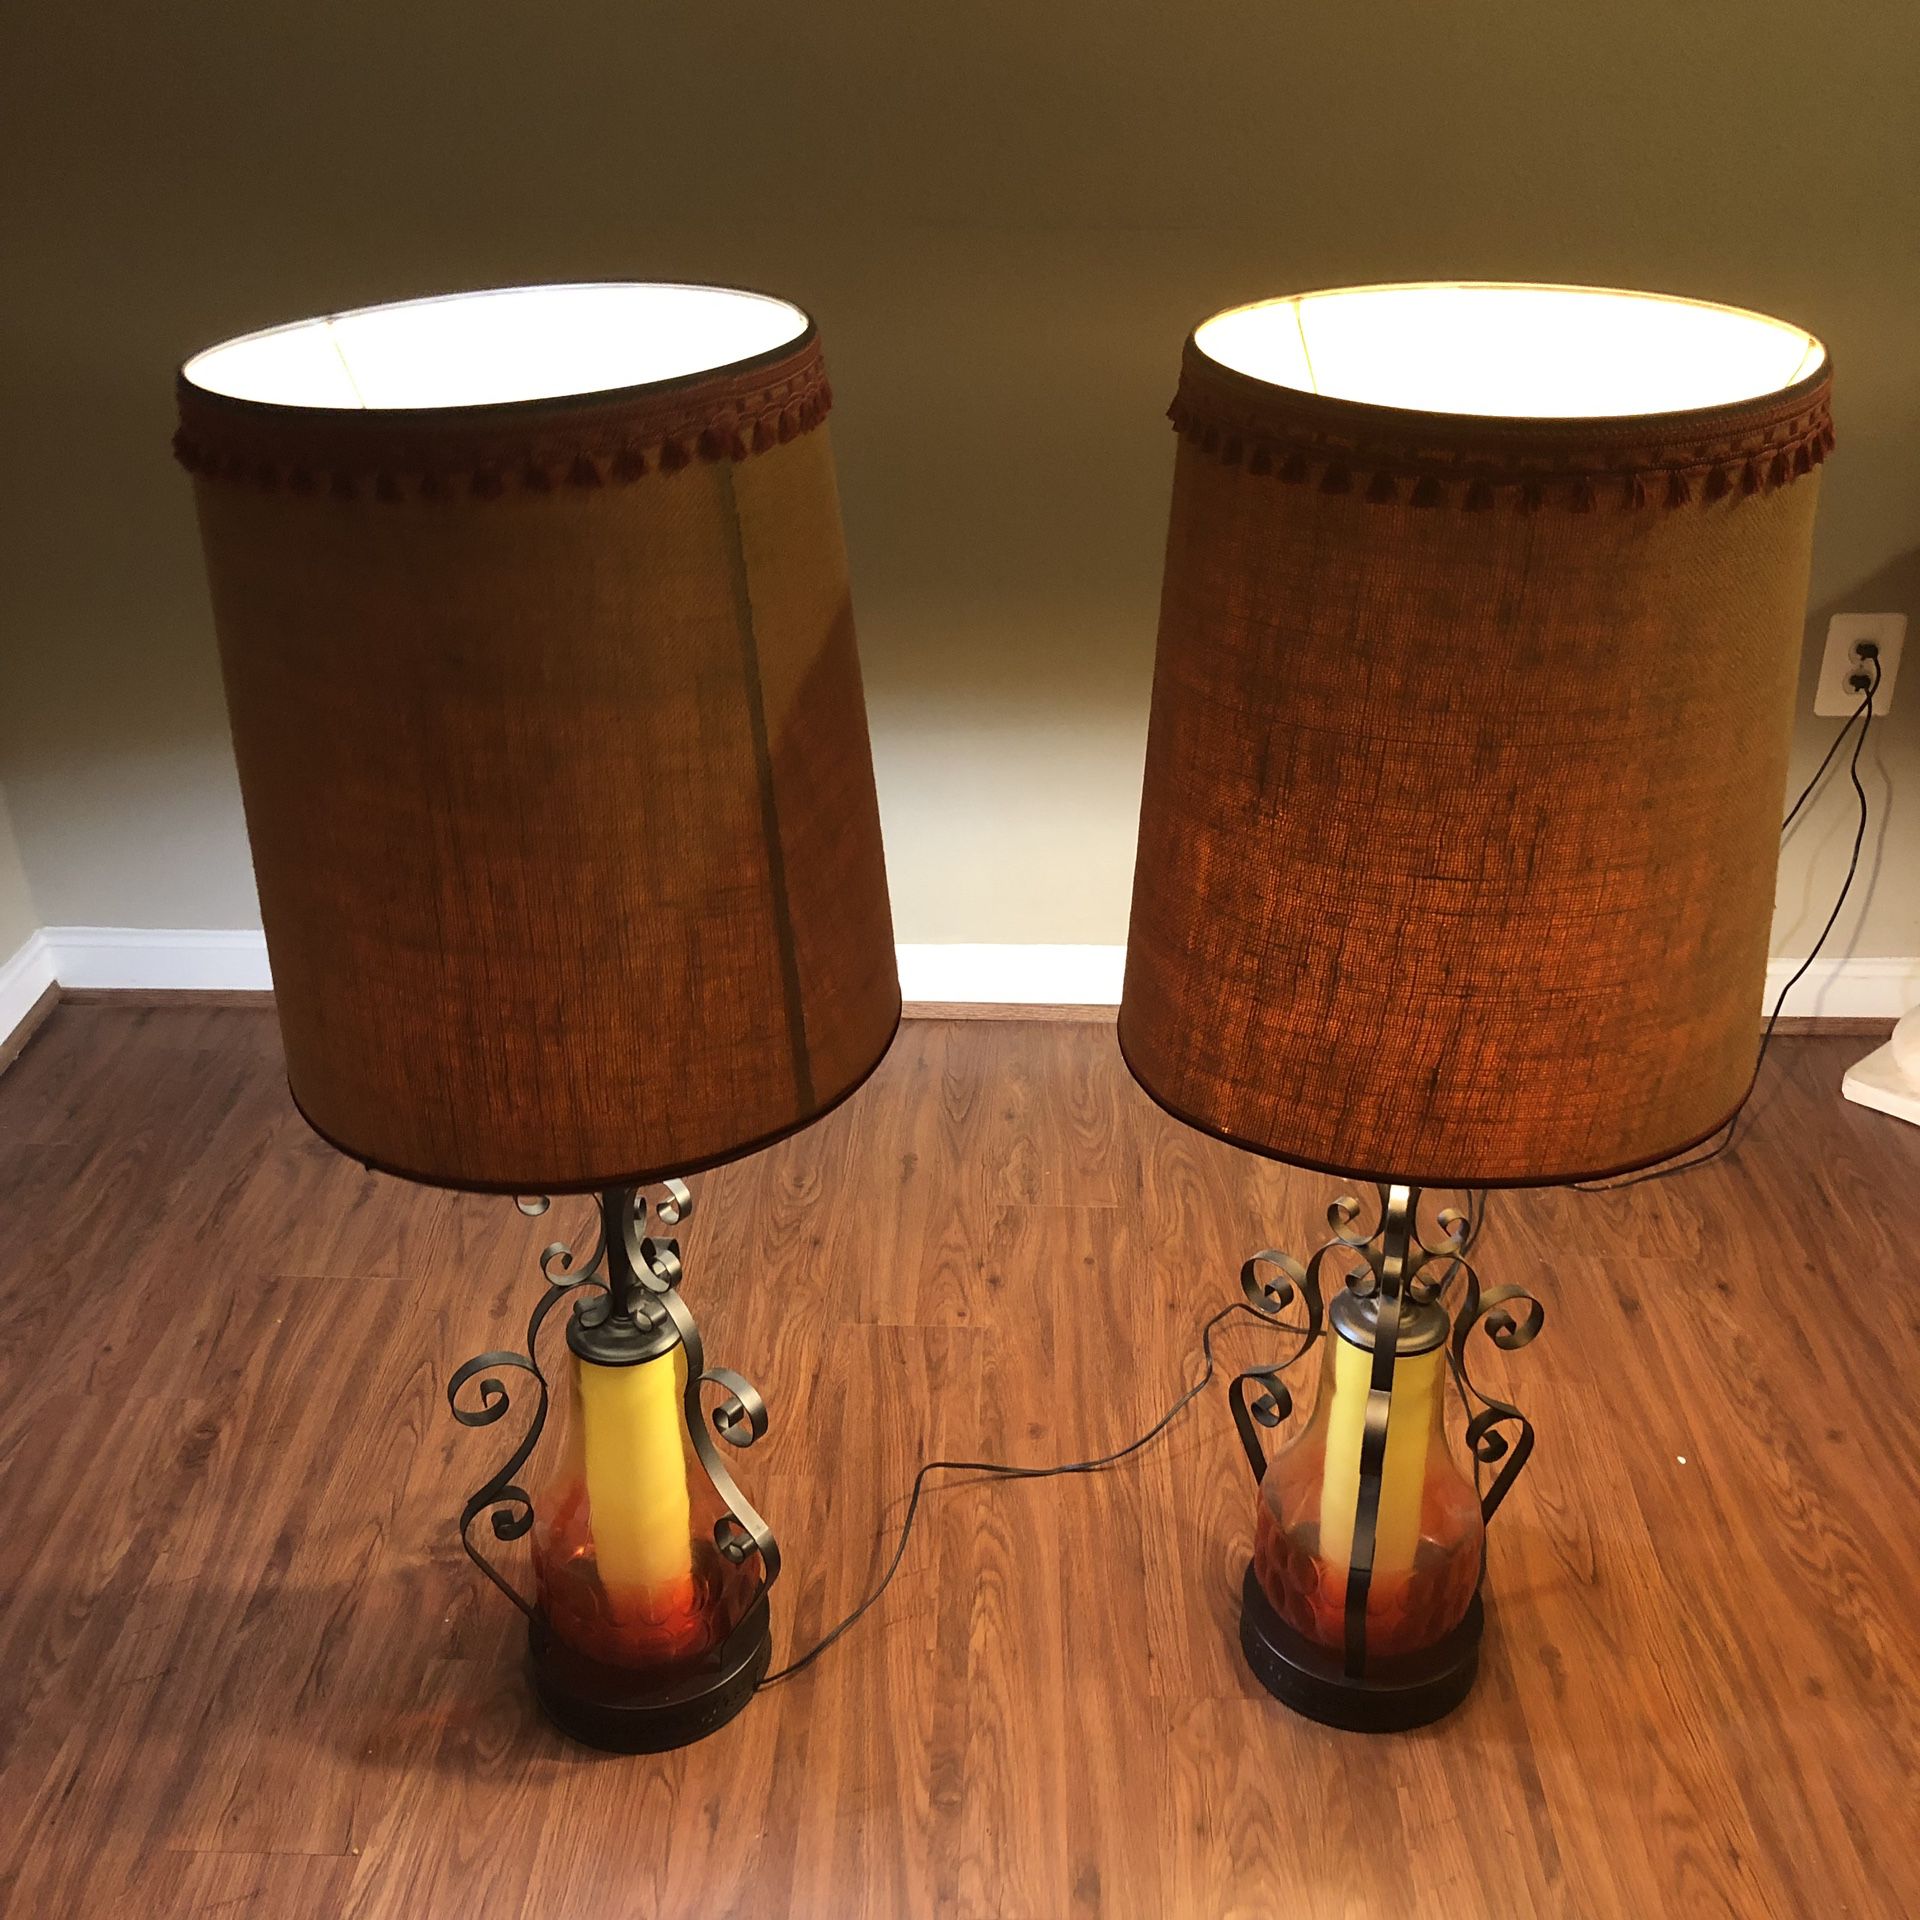 2 Table lamp, three way lights.